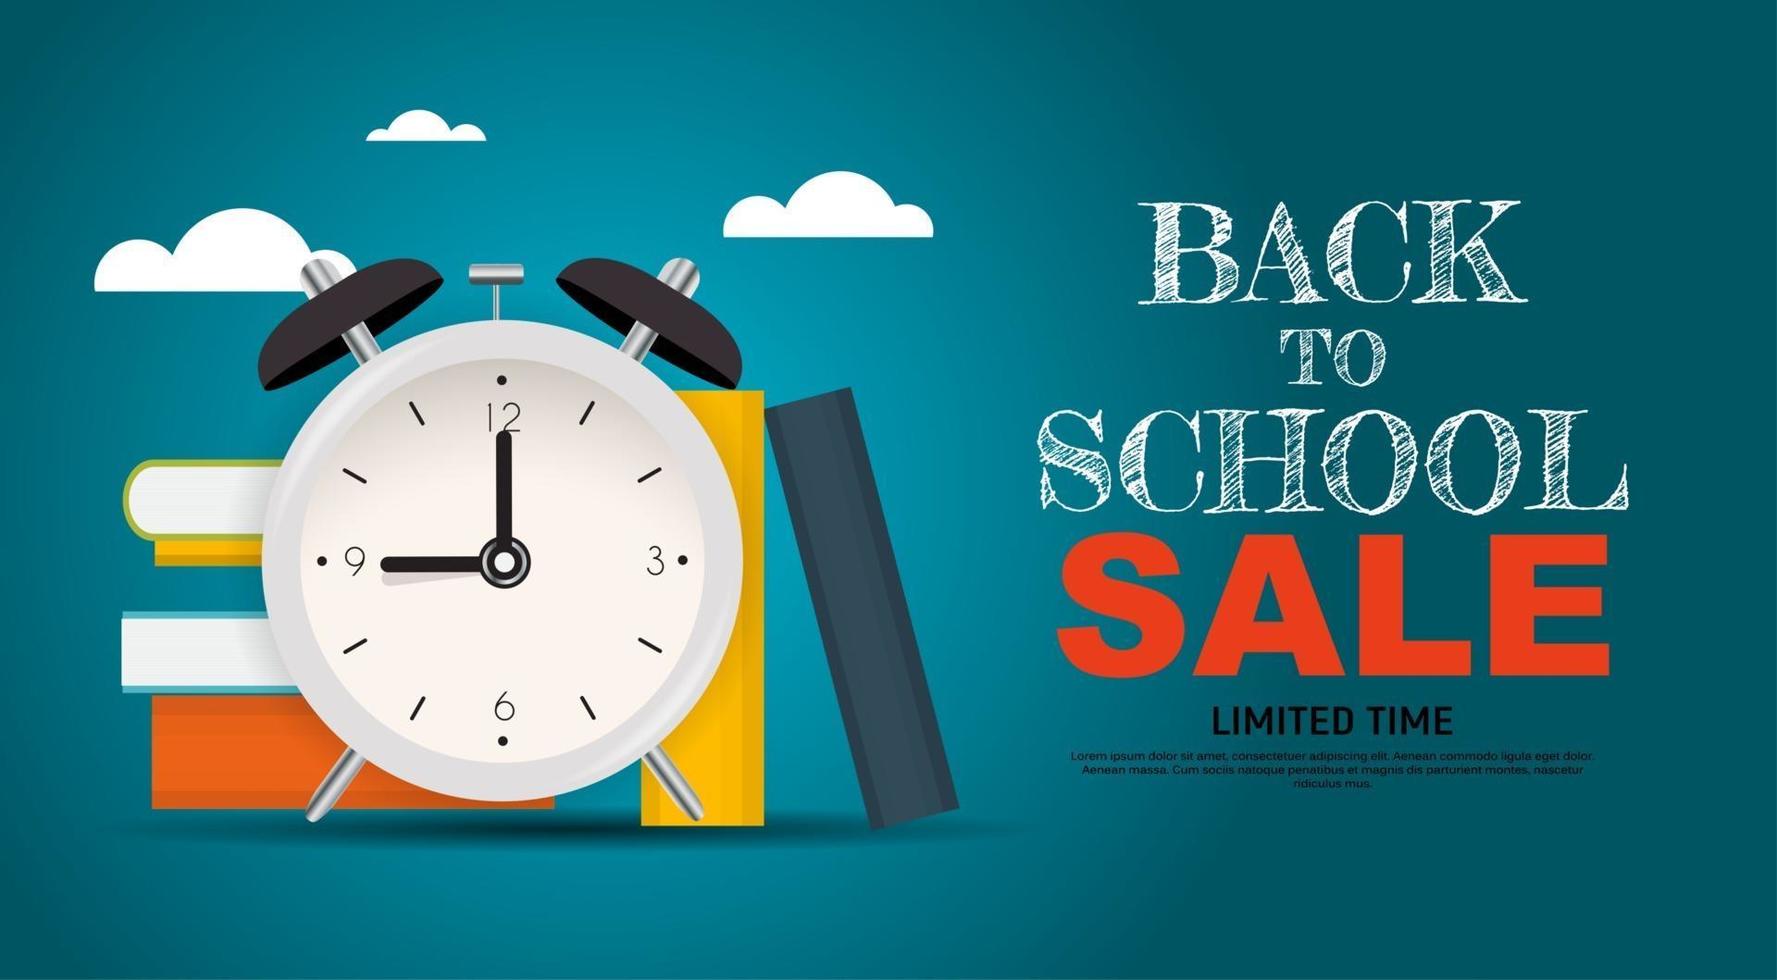 Back to School Special Offer Sale Background. Vector Illustration